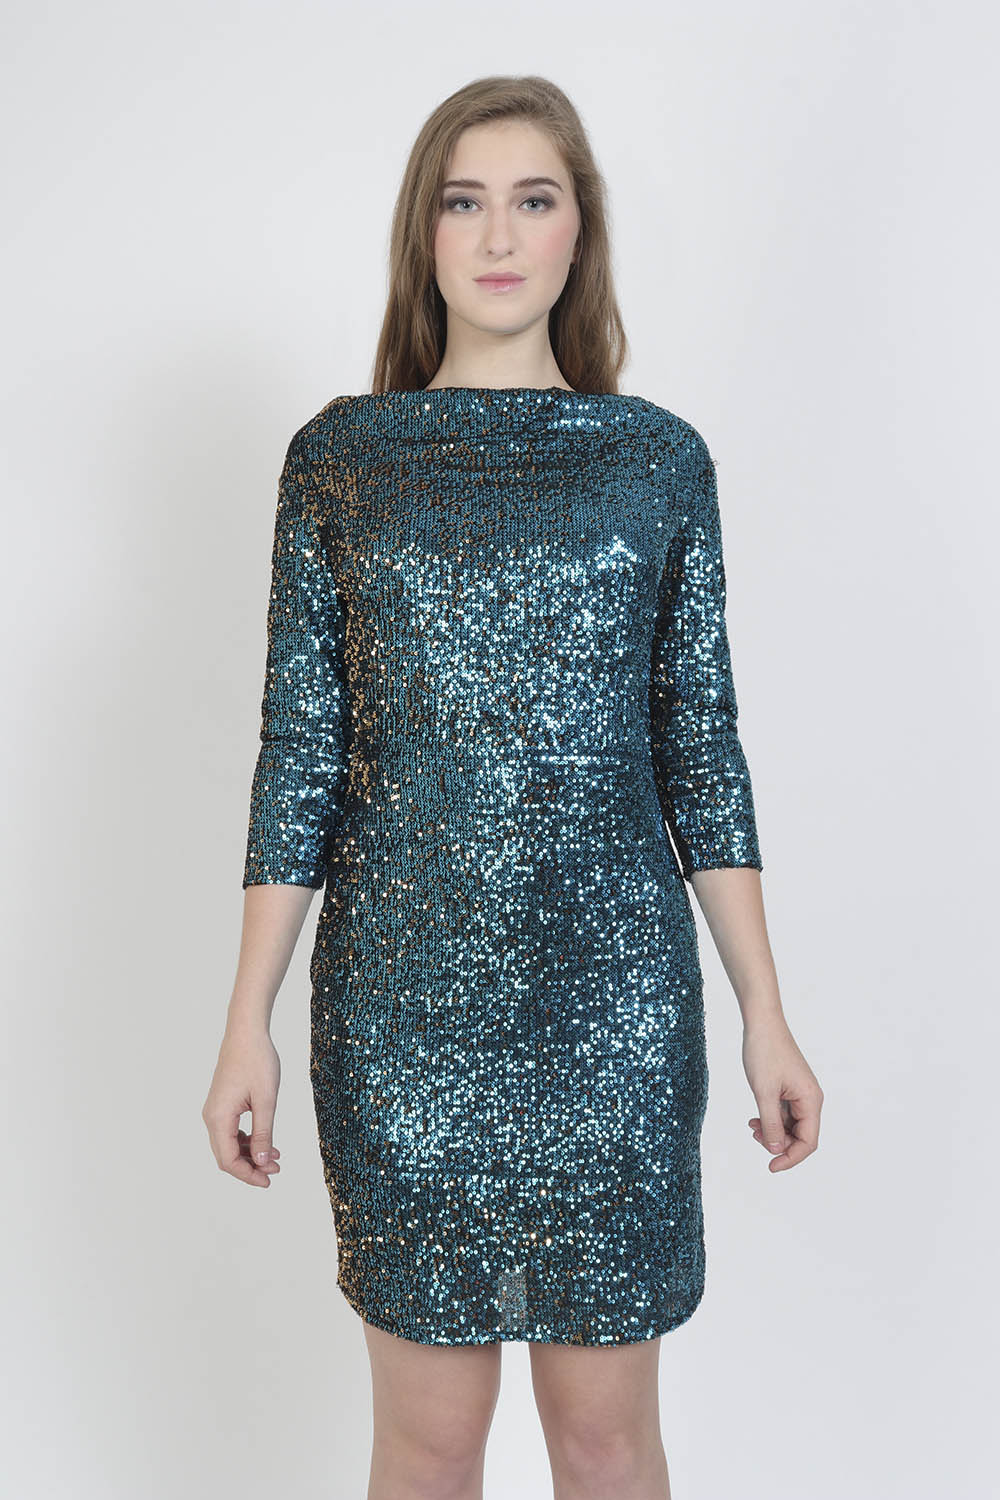 Moonlight Sequin Party Dress - Front